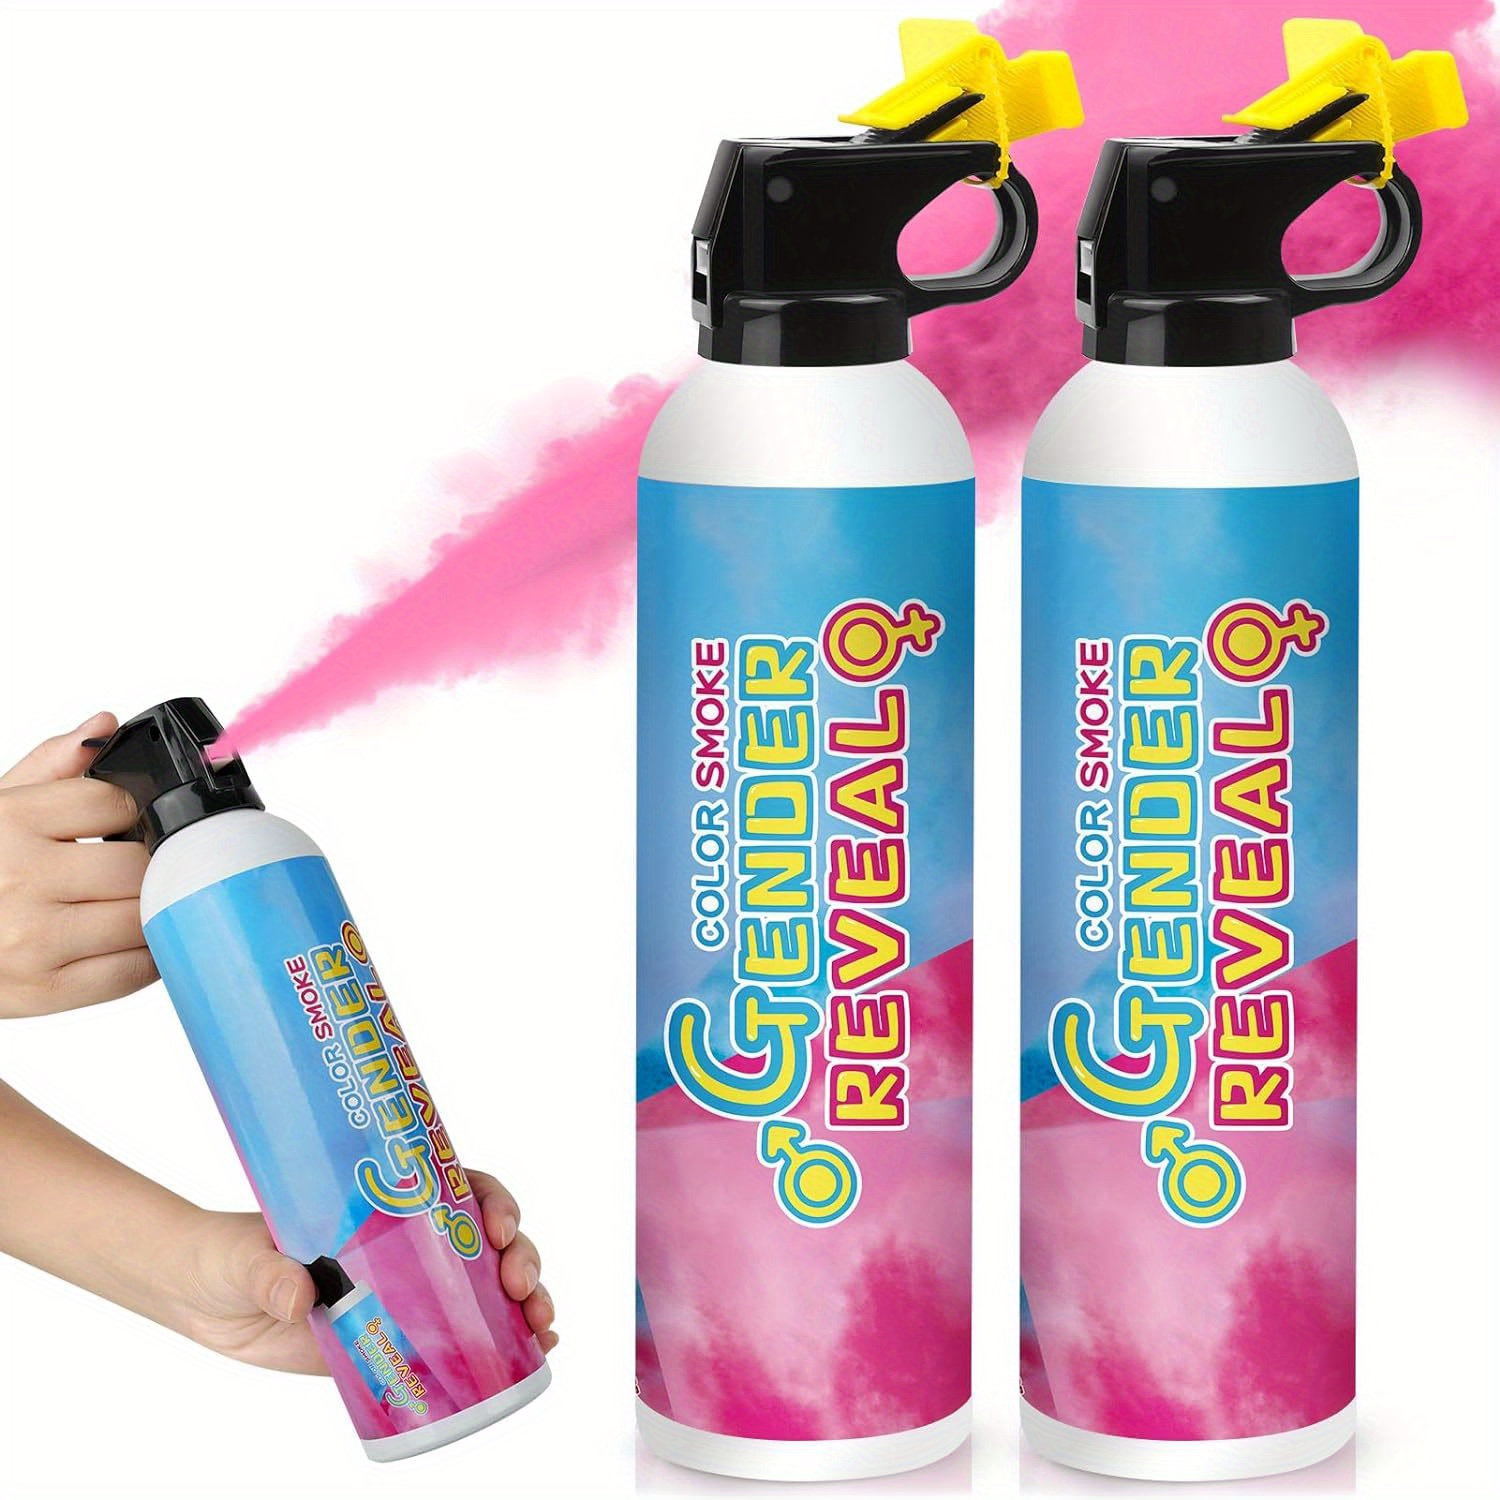 

Set, Gender Reveal Sprayer, Gender Reveal Powder Popper, Boy Or Girl Party Toy, Birthday Baby Shower Party Ideas Gift